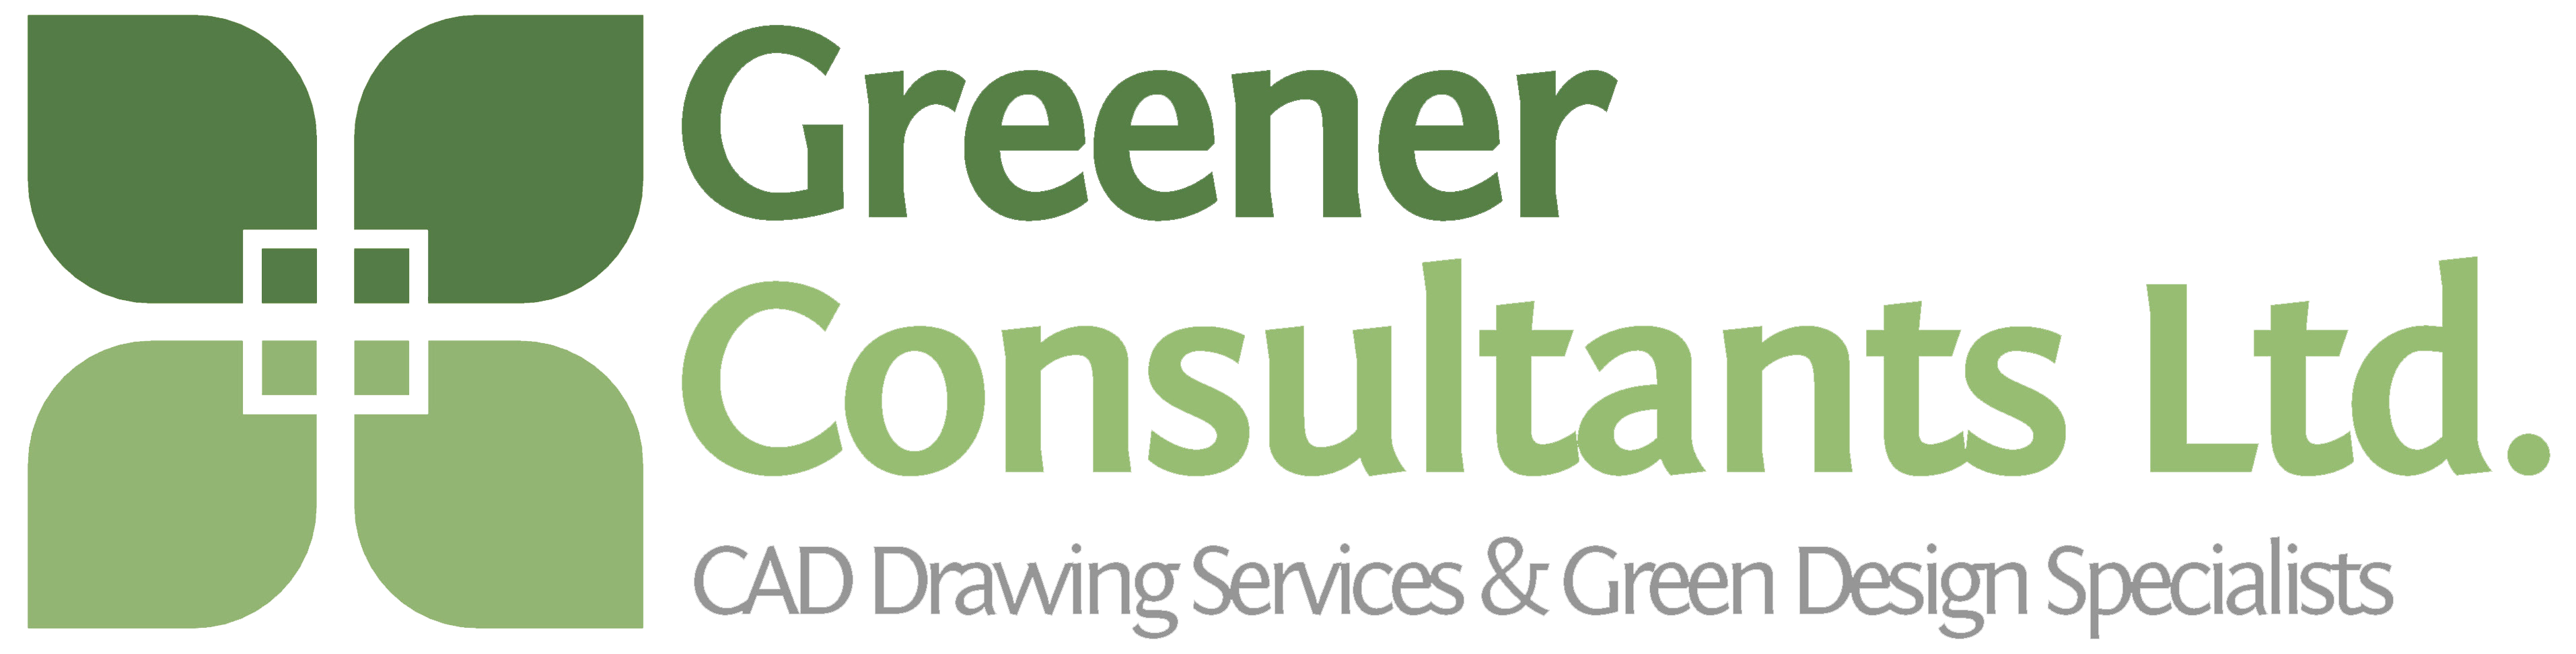 Greener Consultants Ltd